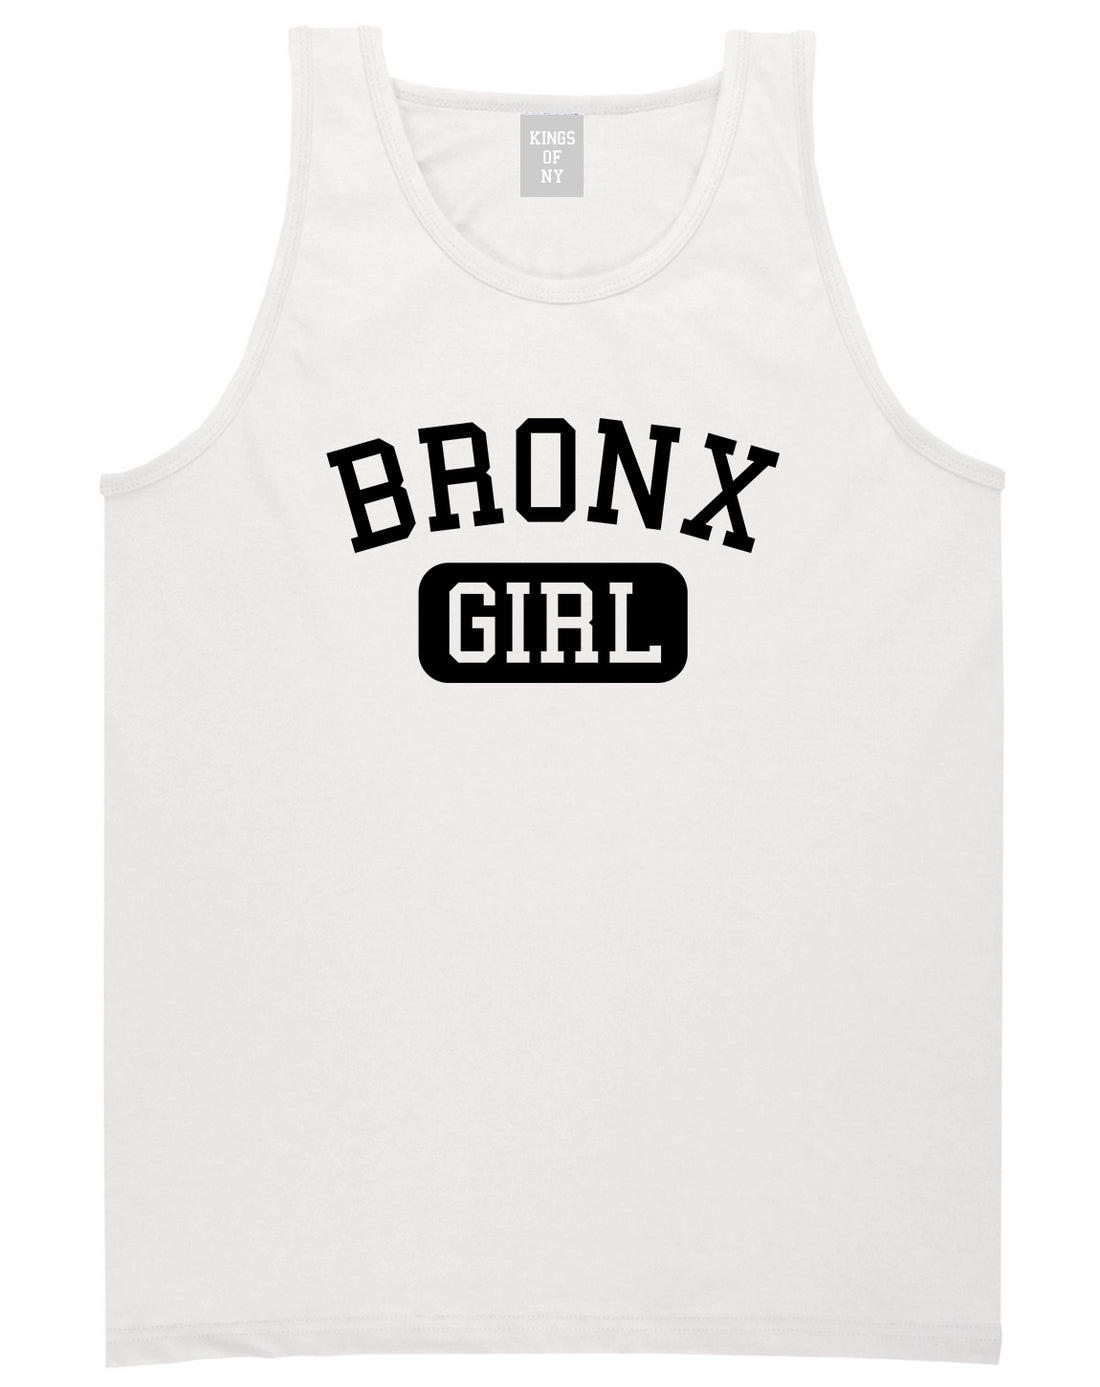 Bronx Girl New York Mens Tank Top T-Shirt White